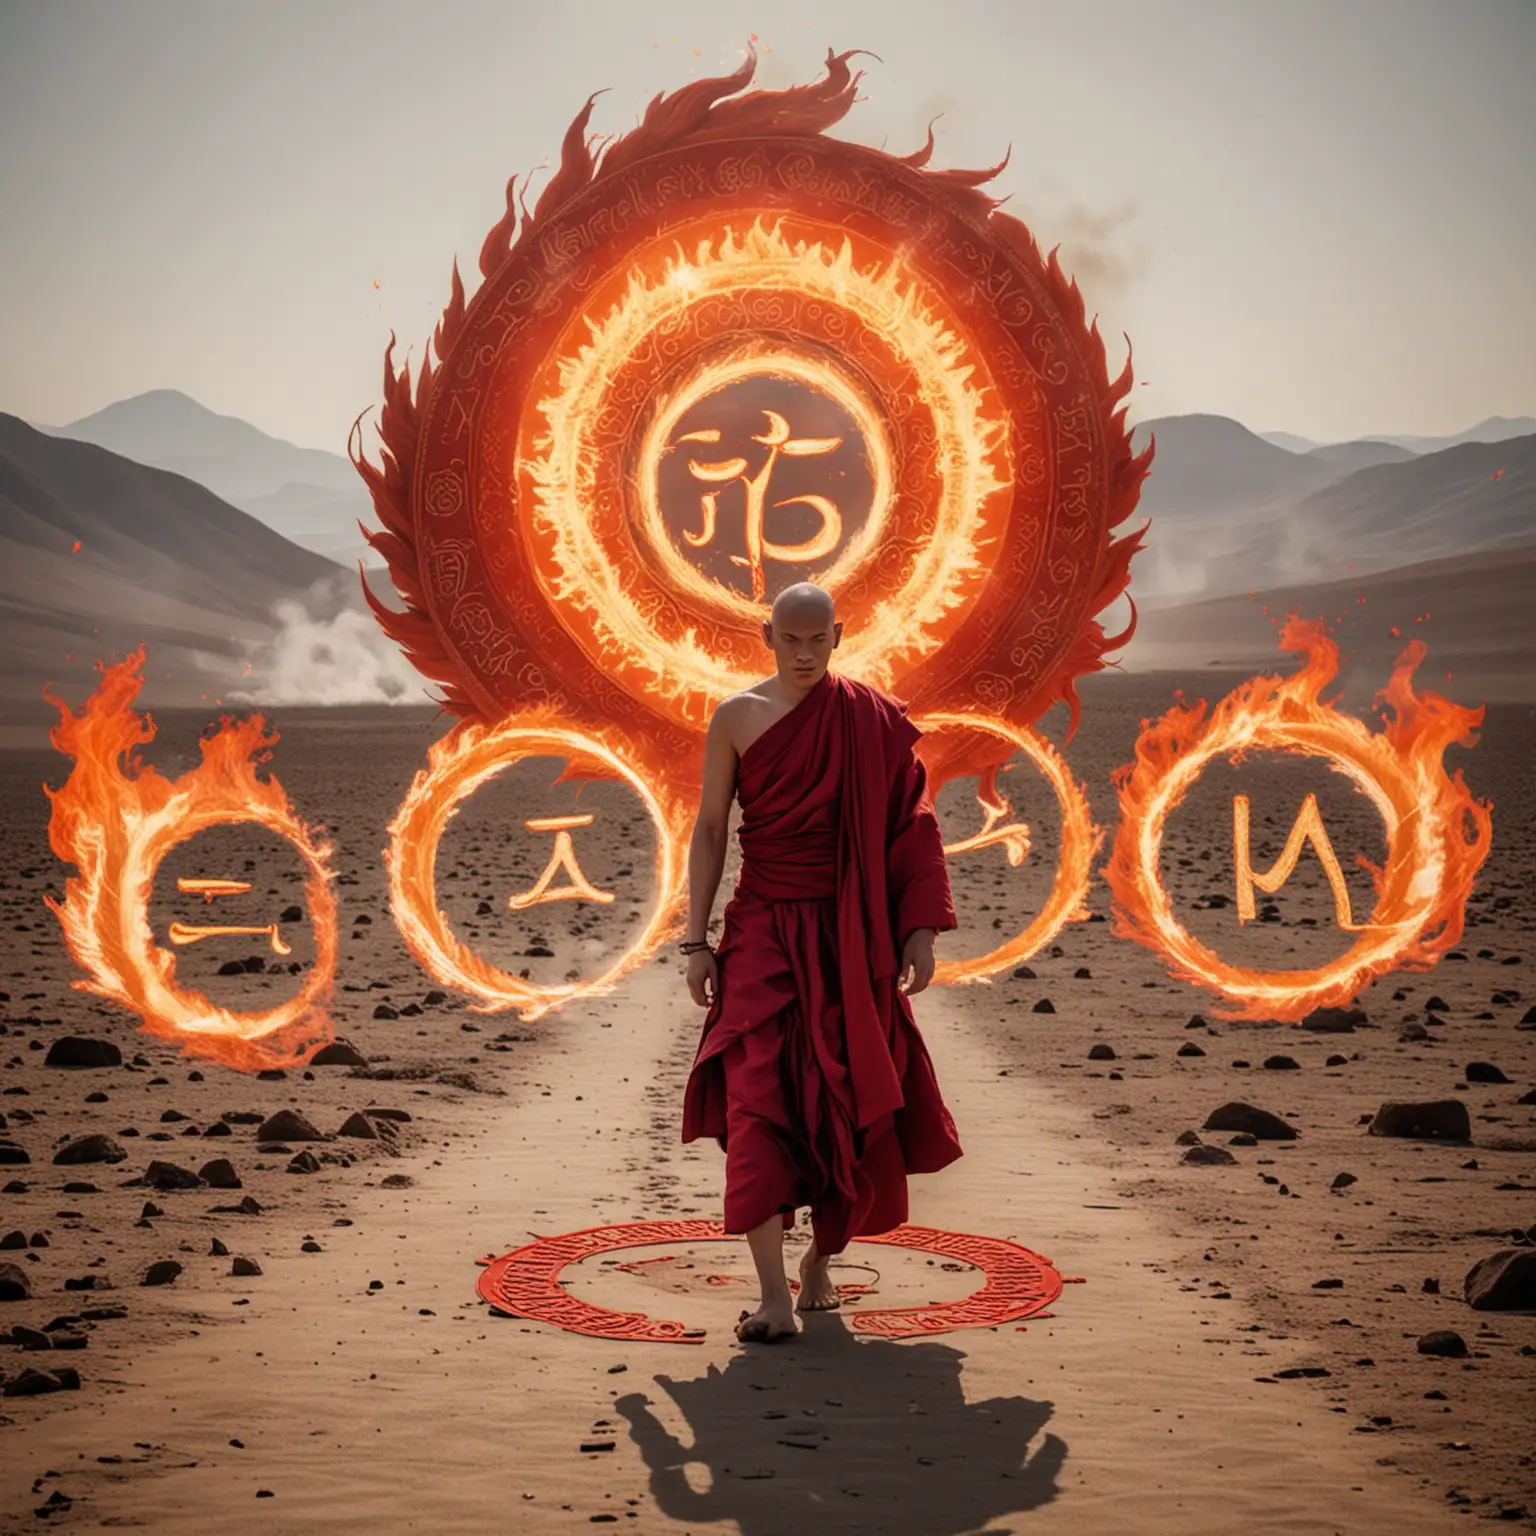 Muscular Tibetan Monk Walking in Desert Fire Circle with Red Dragon